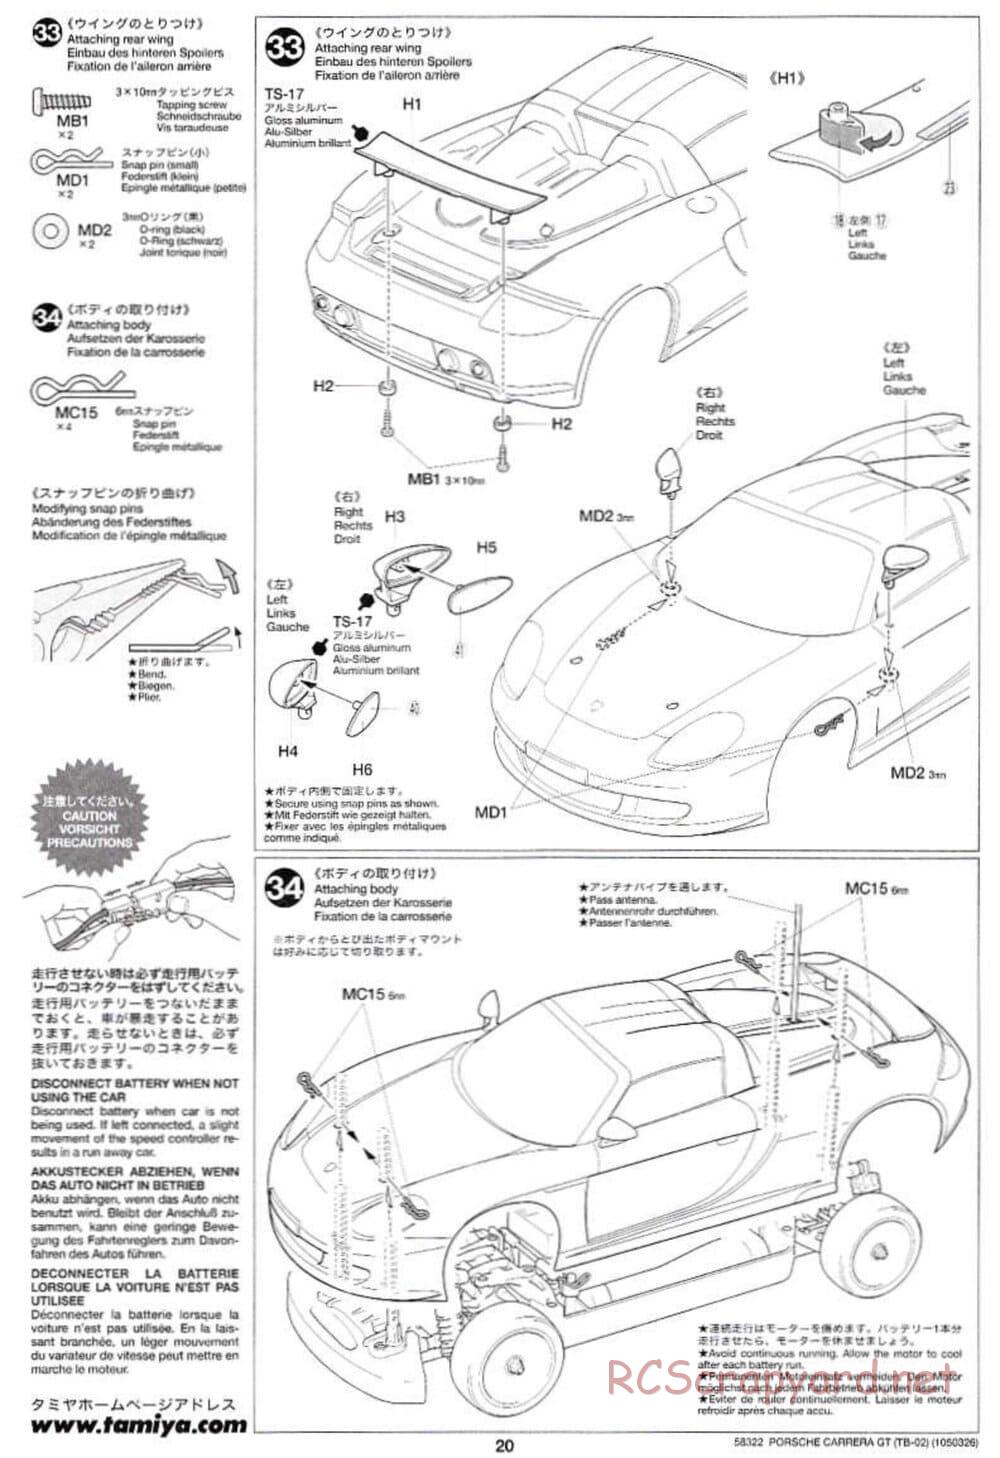 Tamiya - Porsche Carrera GT - TB-02 Chassis - Manual - Page 20